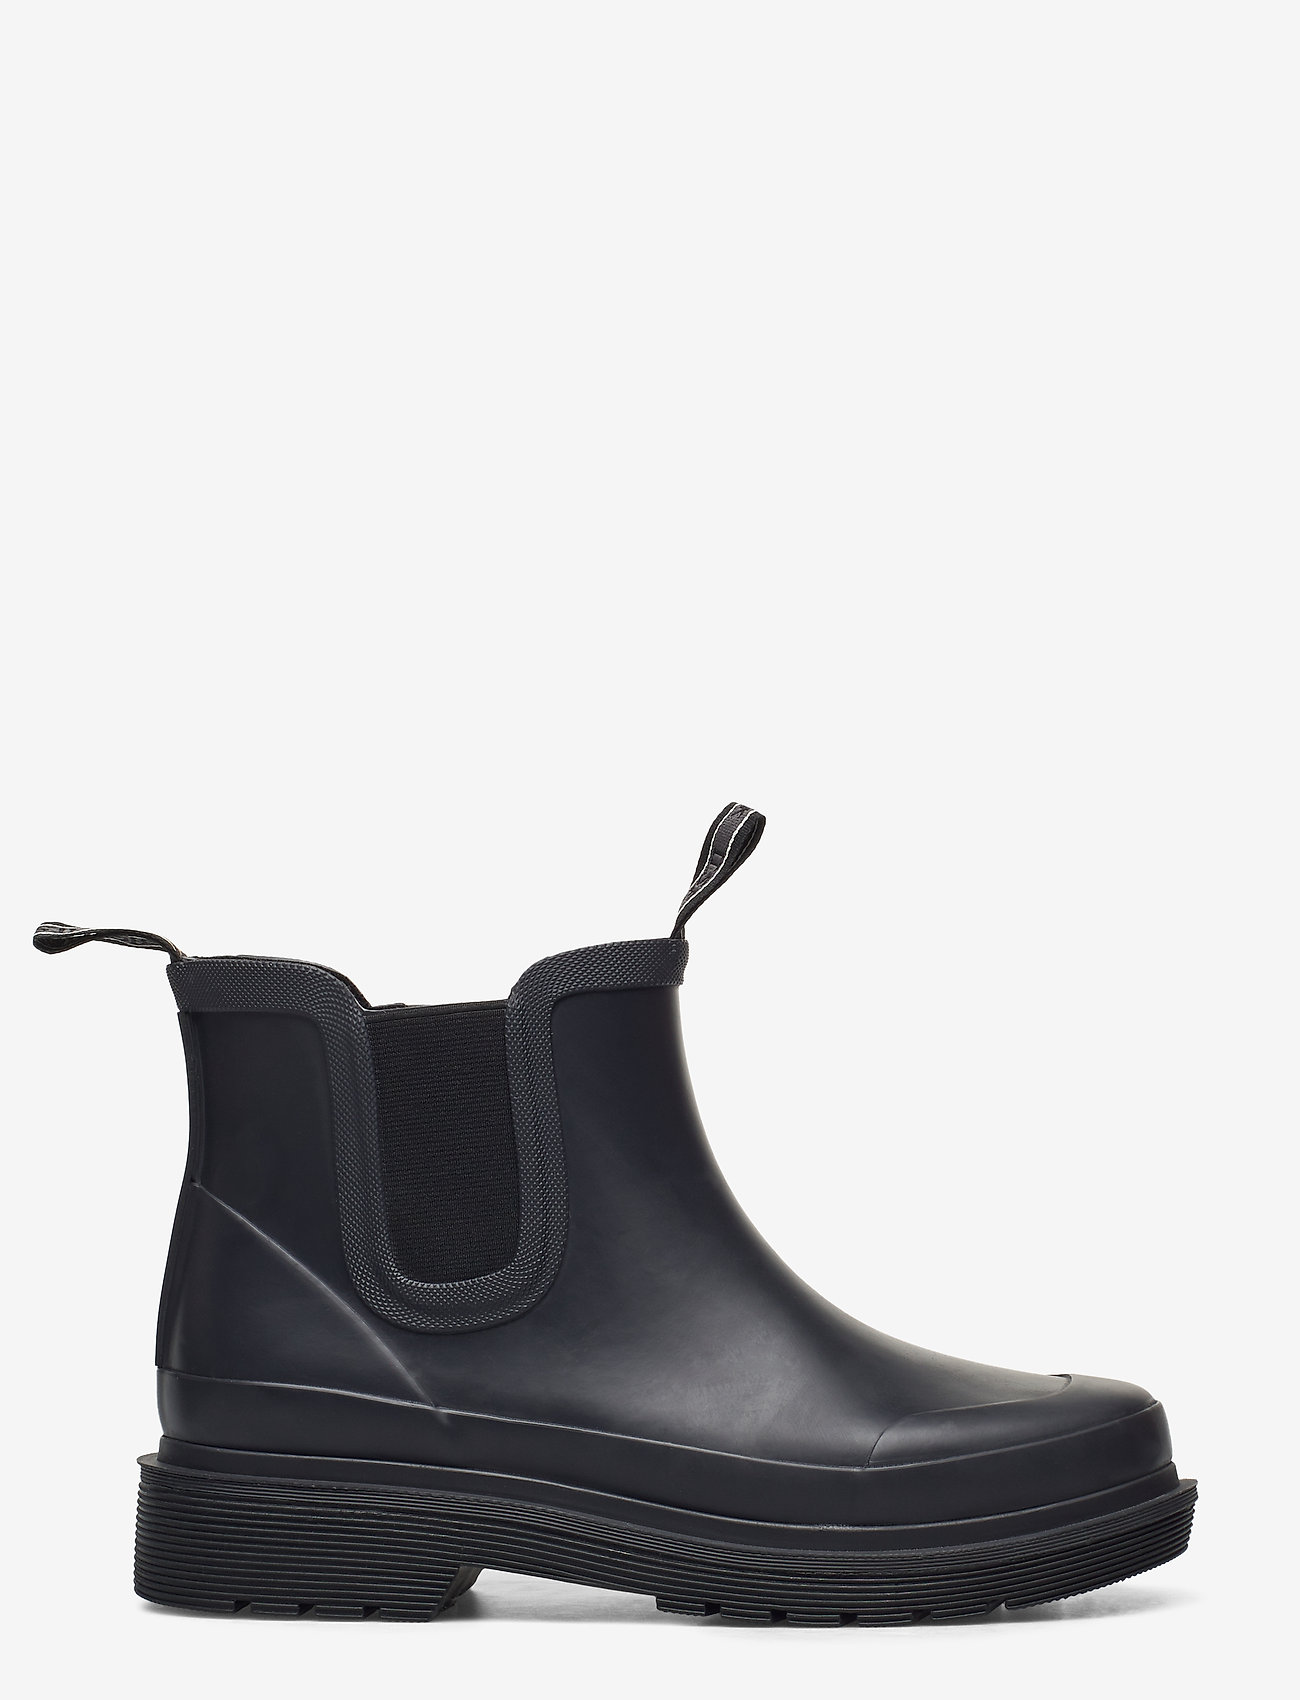 Ilse Jacobsen - Rubber boots ankel - kvinder - black - 1